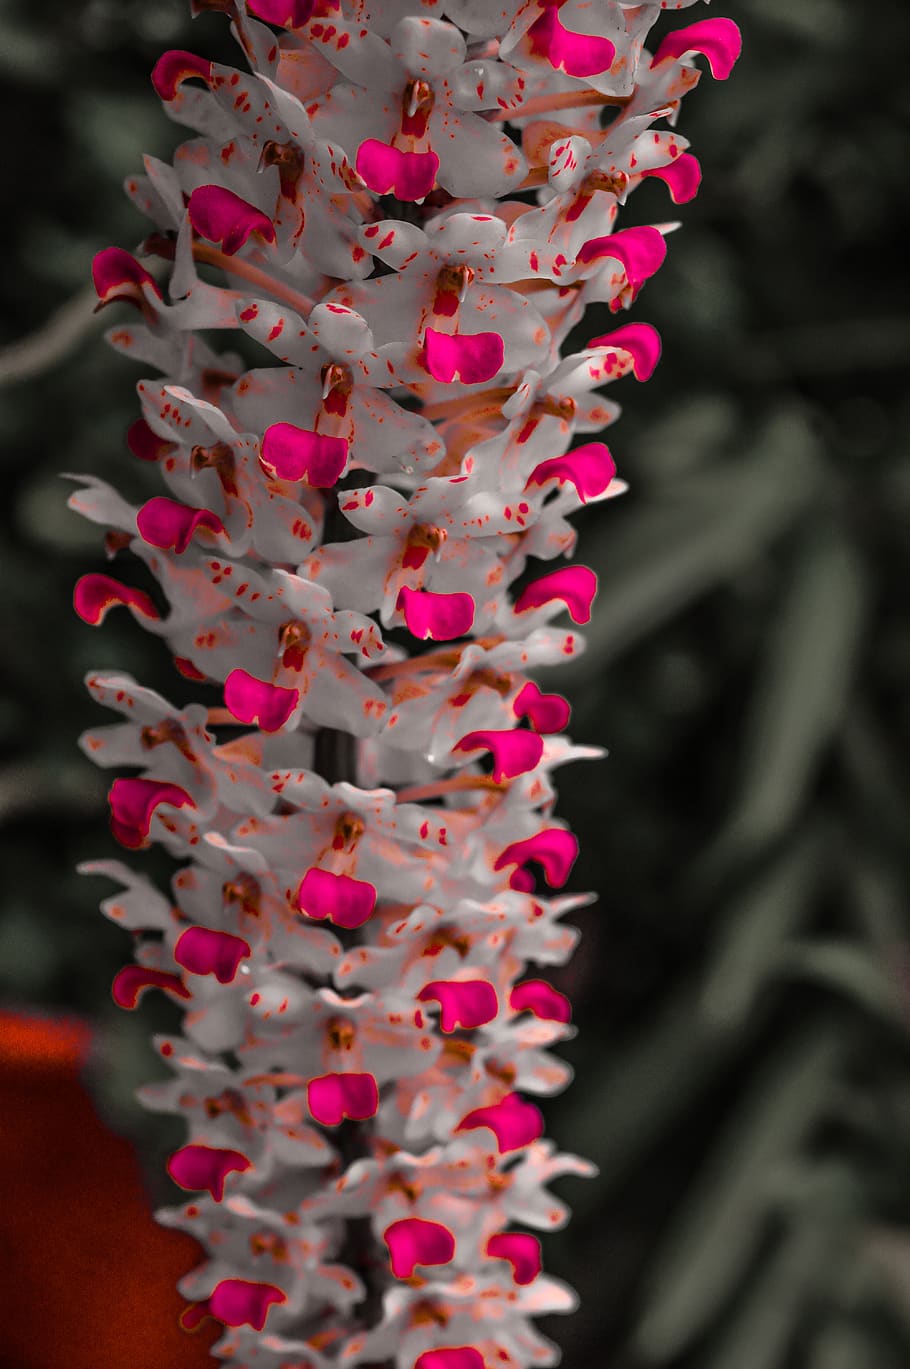 flowers, bunch, orchid, kerala, red white, nikon d3200, nikon photography